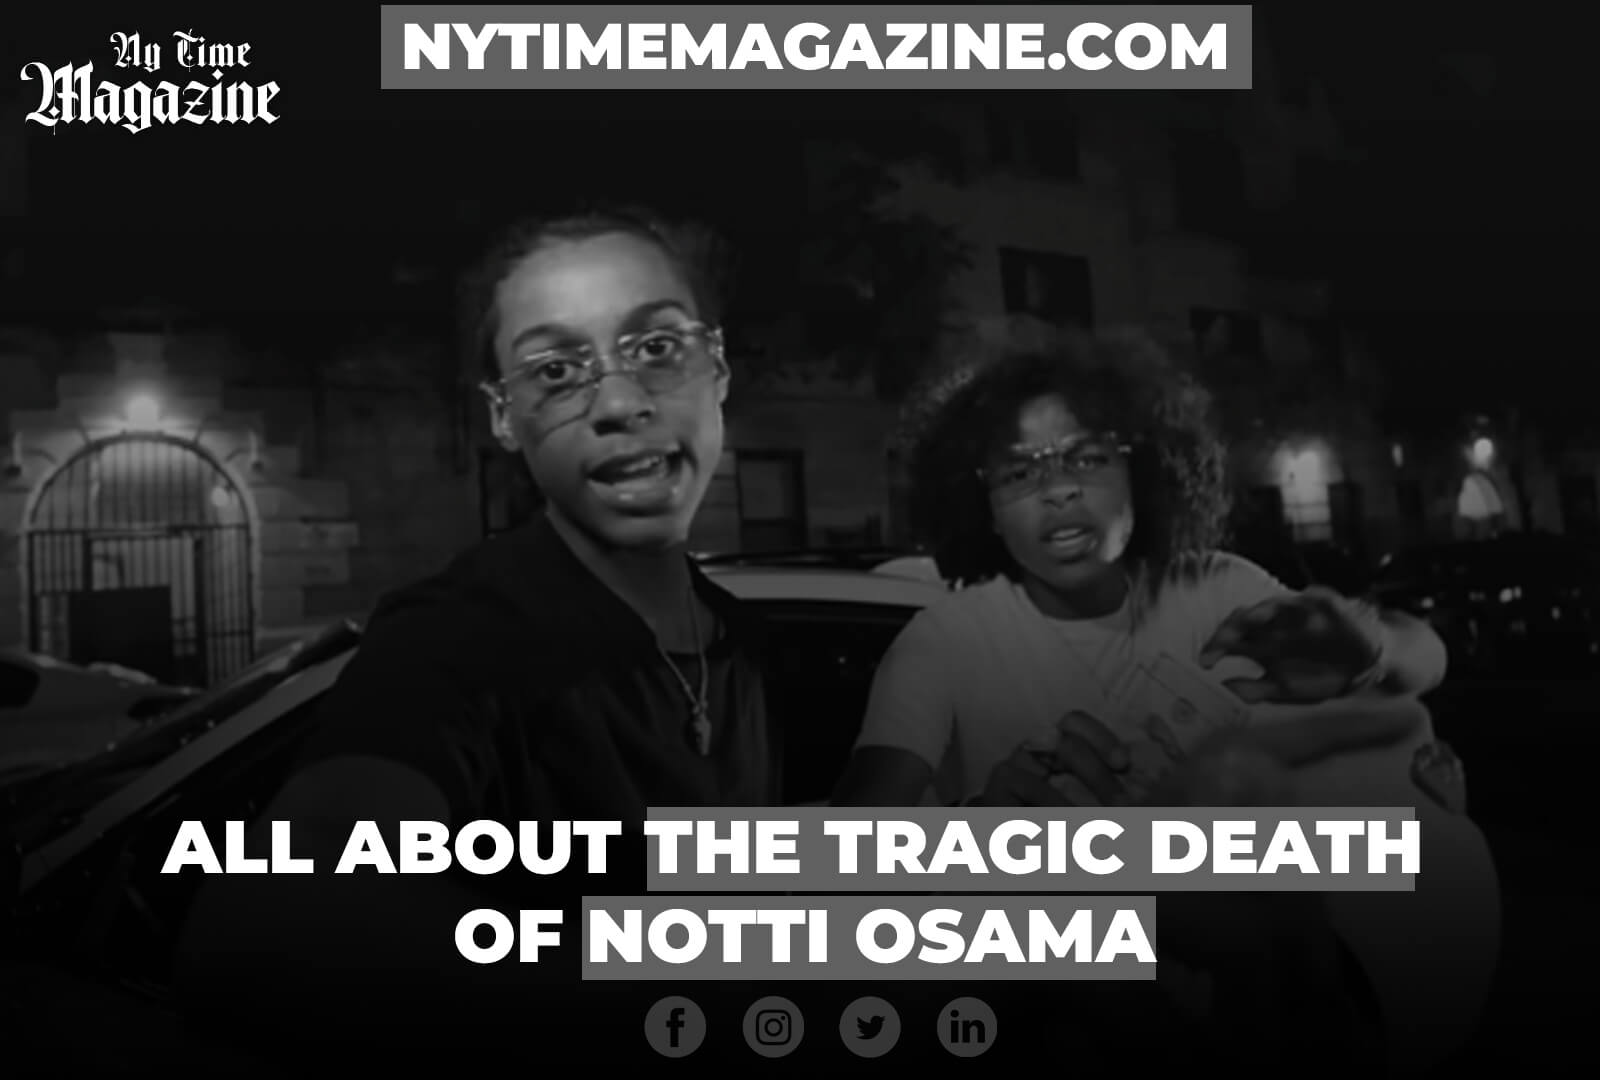 ALL ABOUT THE TRAGIC DEATH OF NOTTI OSAMA